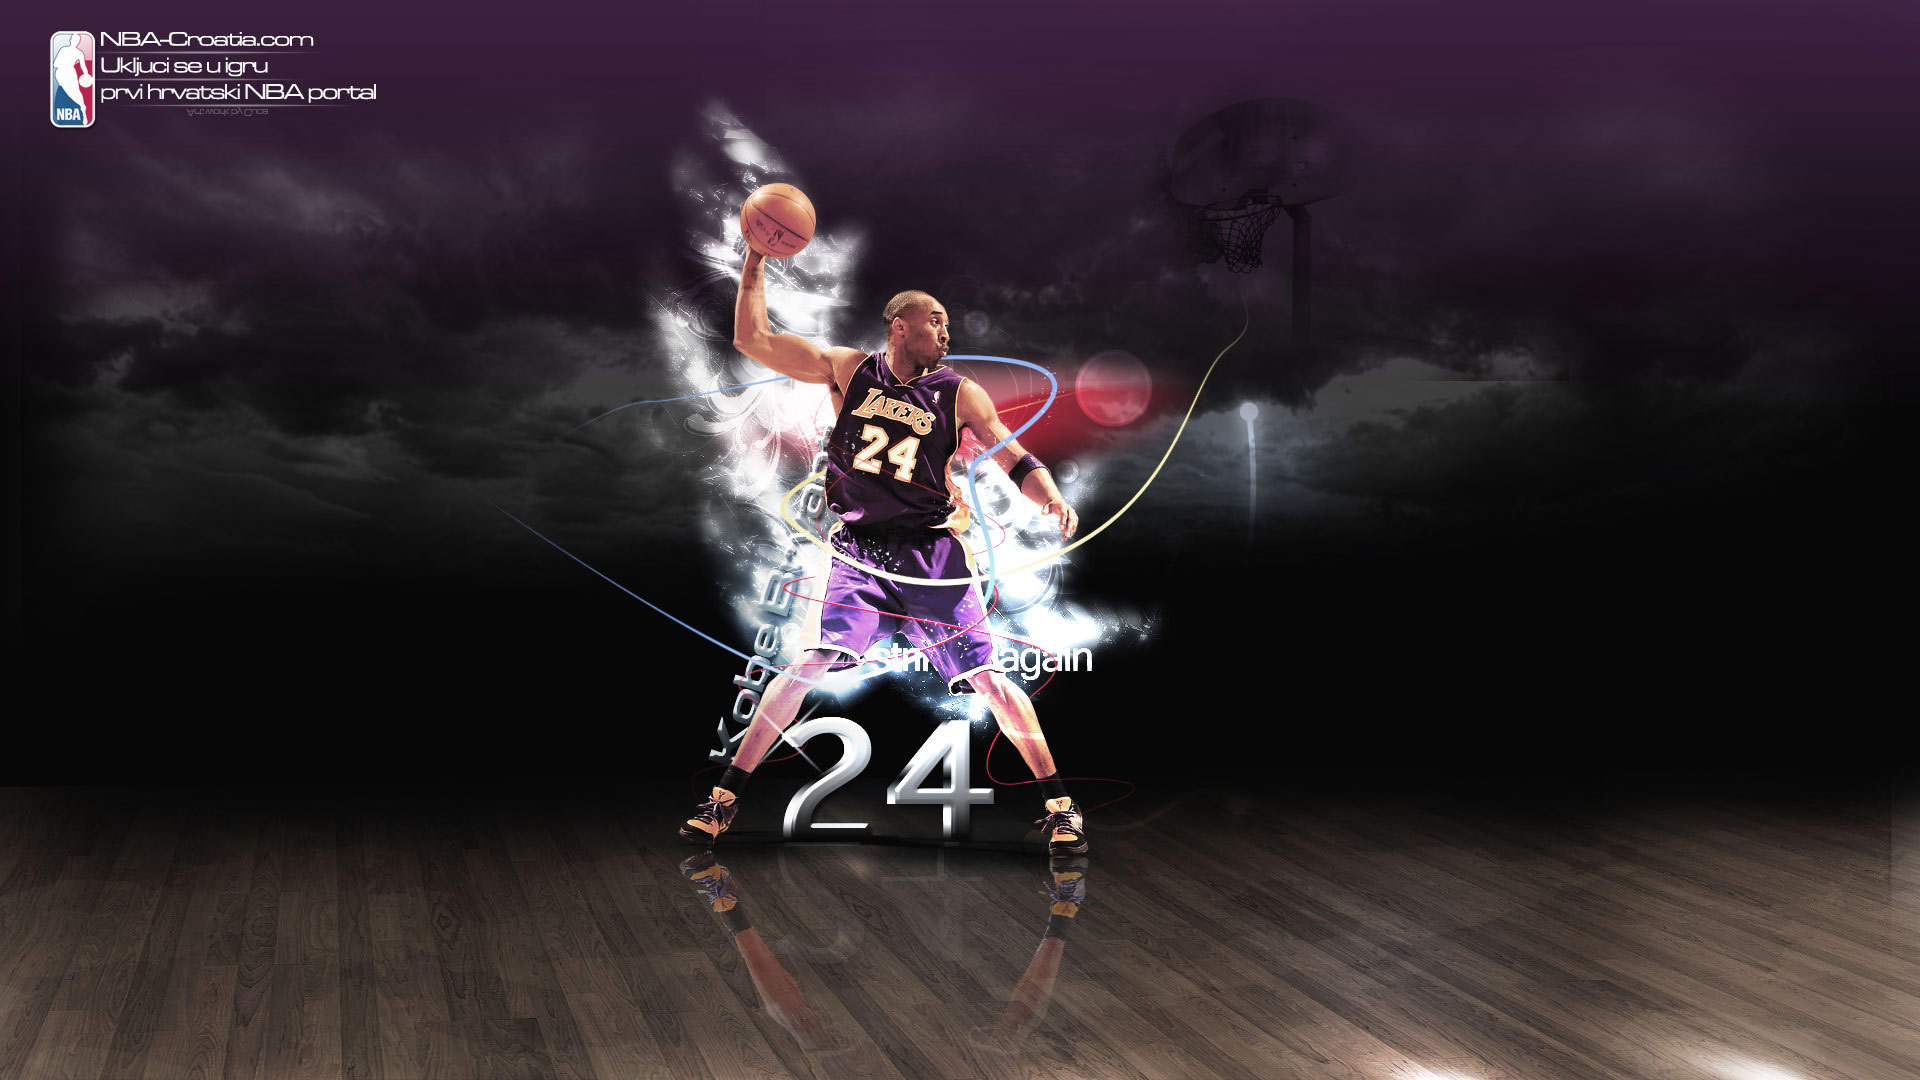 Nba Wallpaper Kobe Bryant Has Basketball Held In Hand The Great